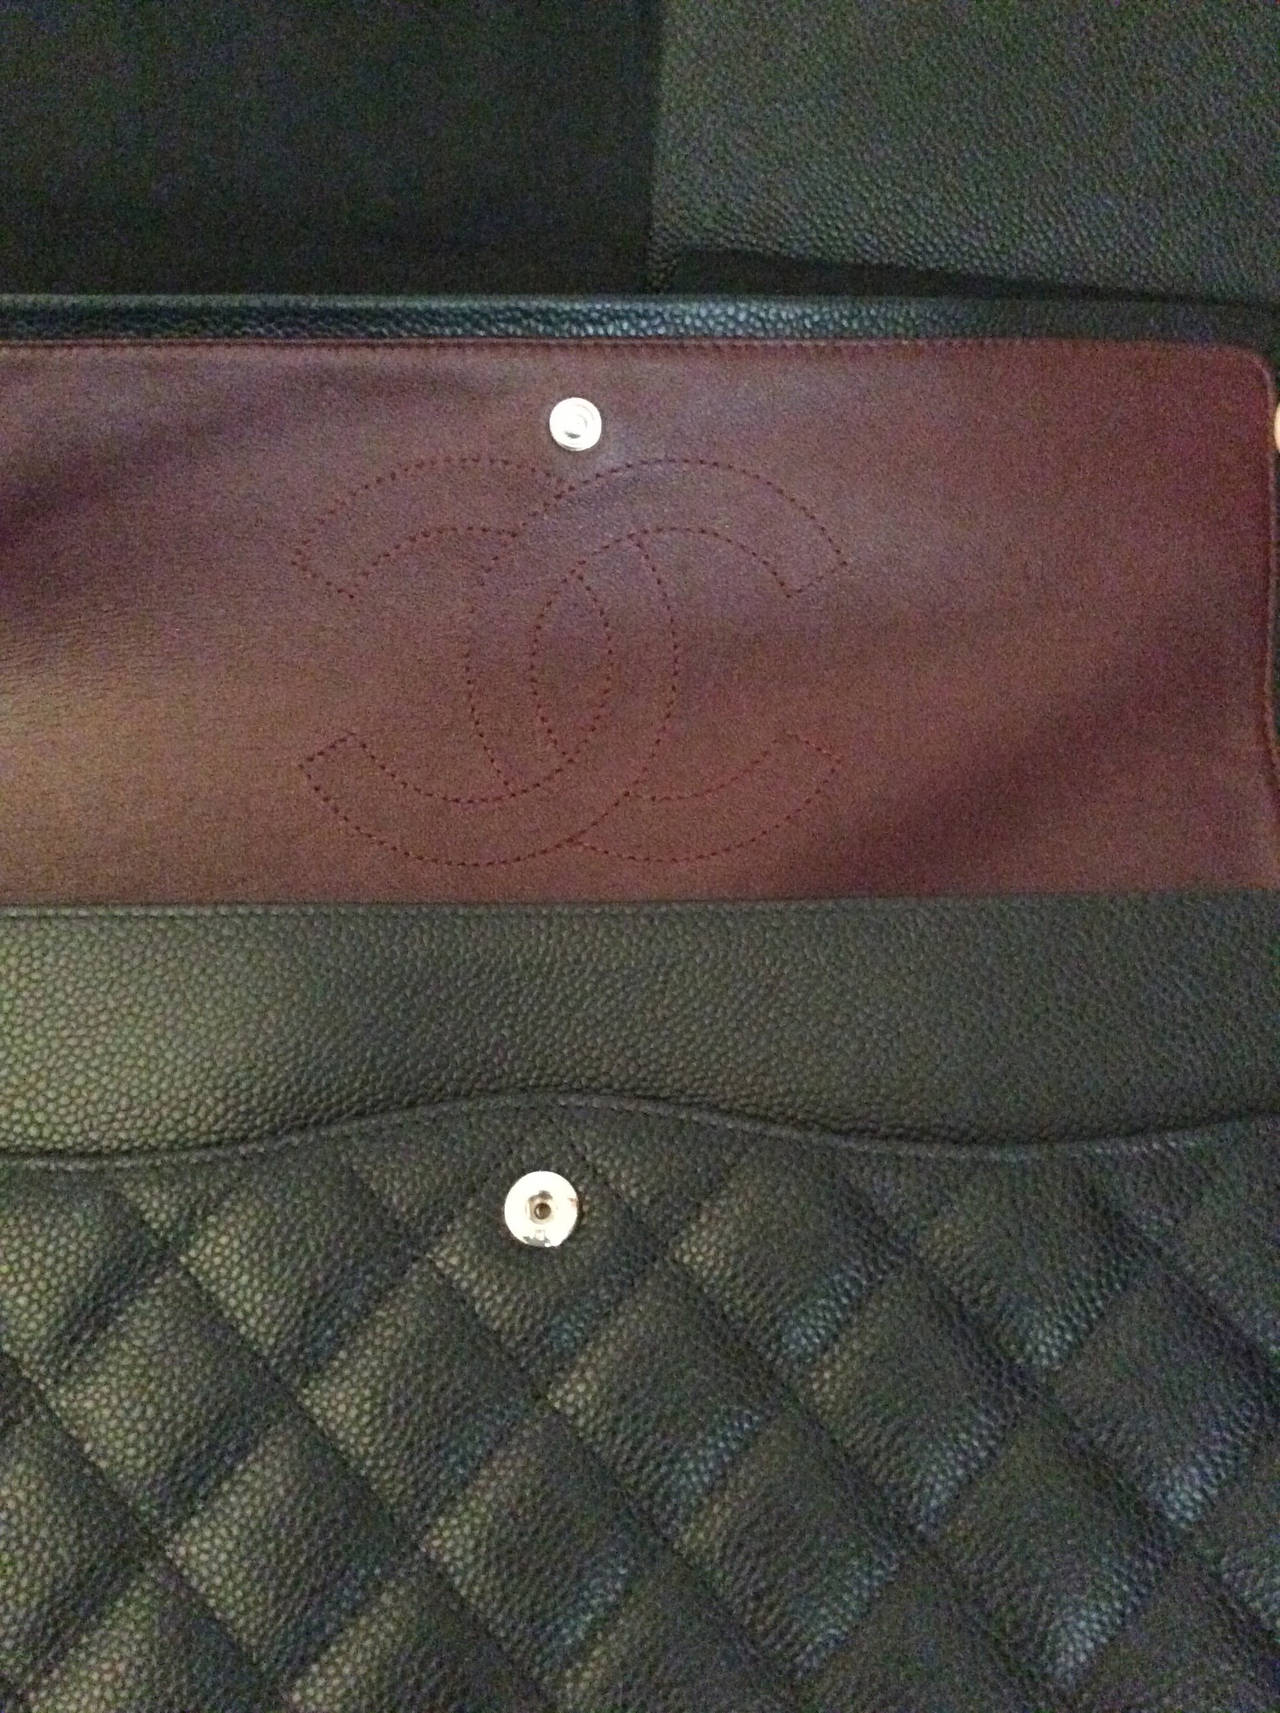 New Chanel Classic Double Flap Maxi Bag - Caviar 1